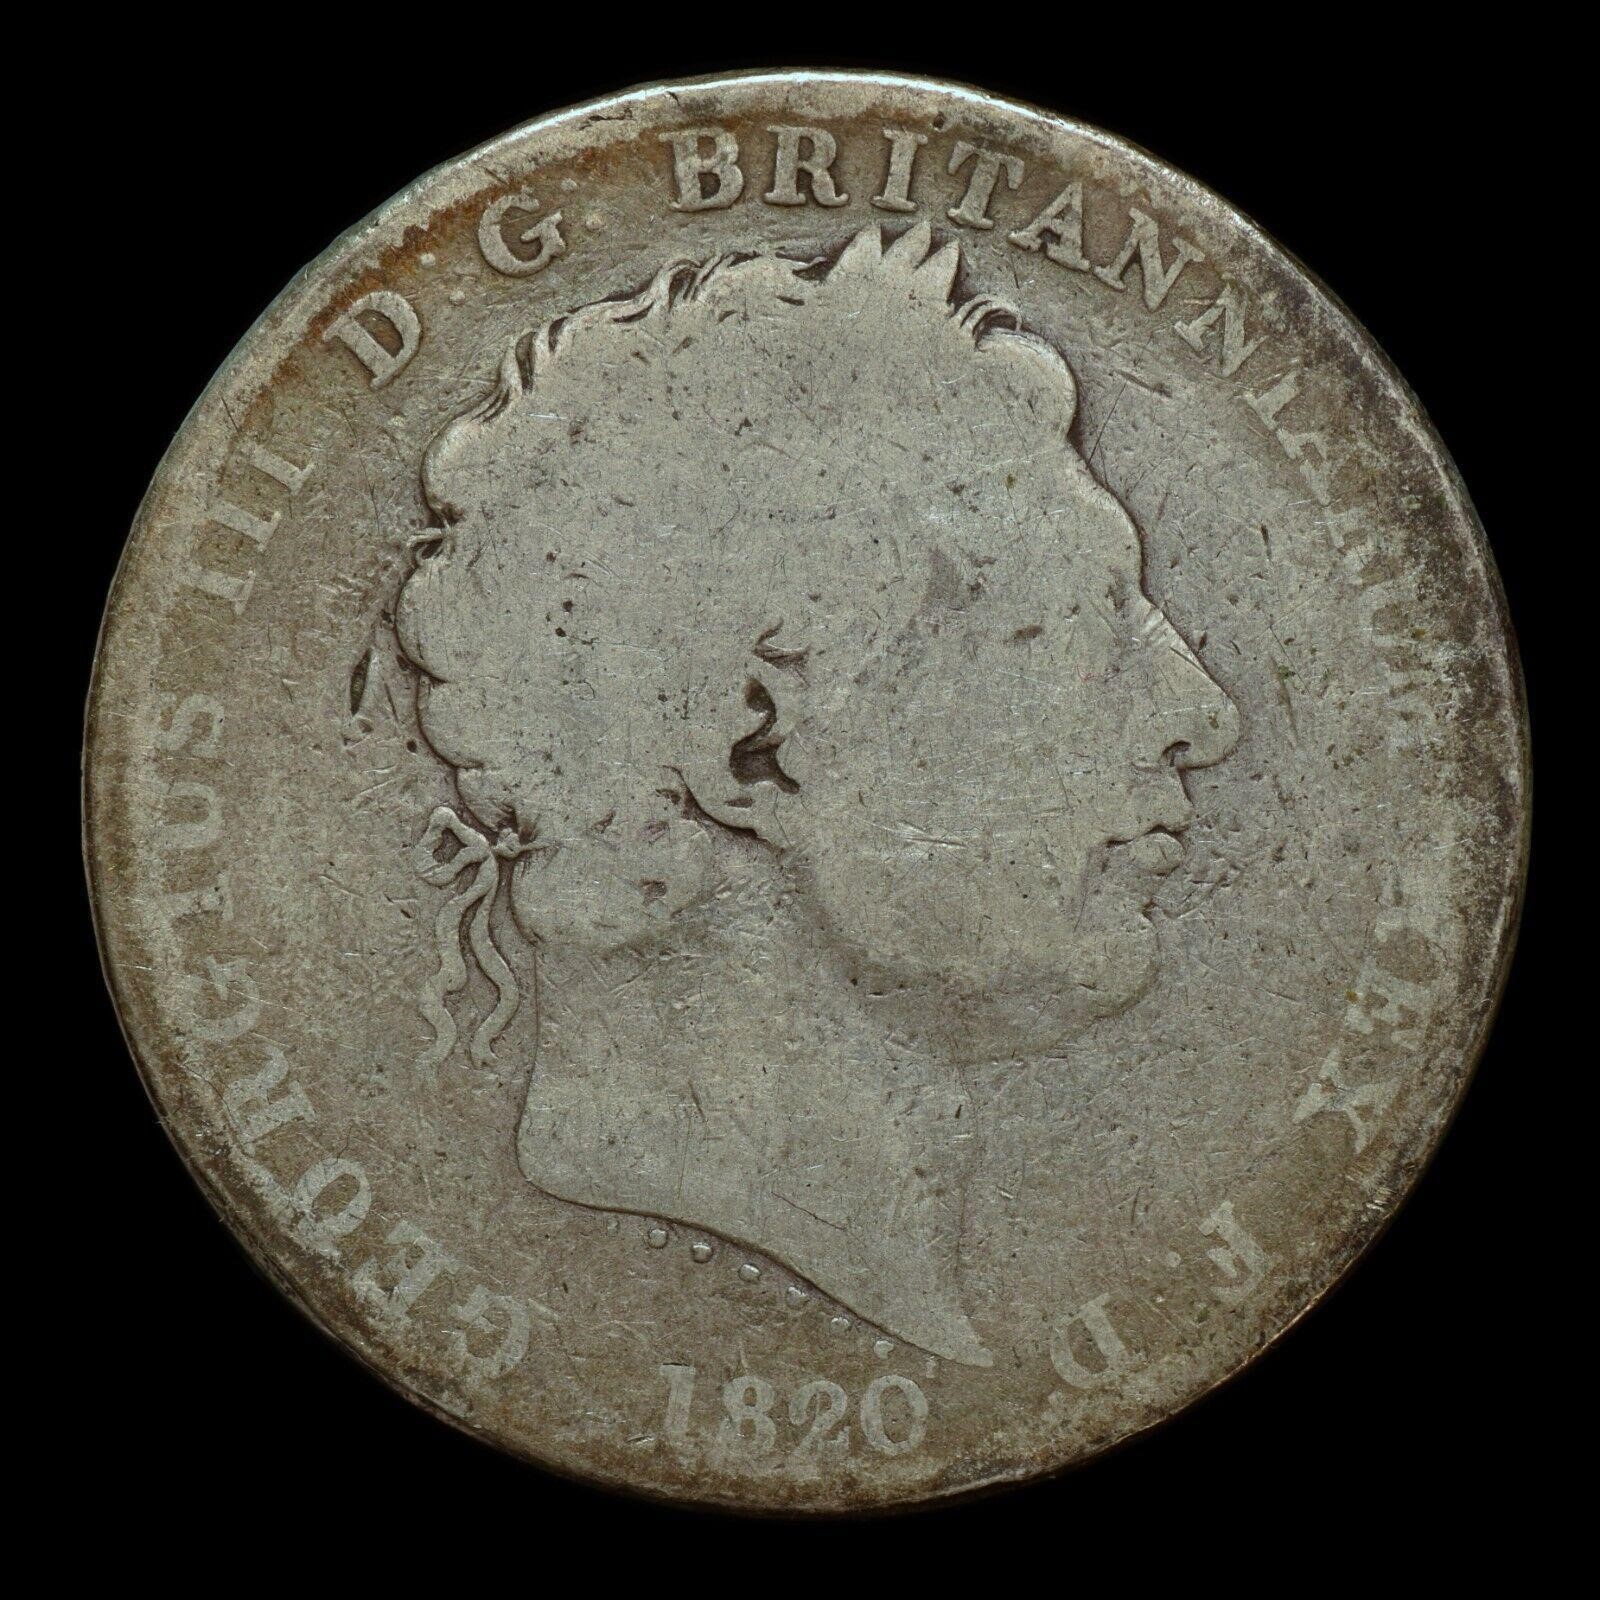 1820 BRITAIN CROWN SILVER COIN KING GEORGE III